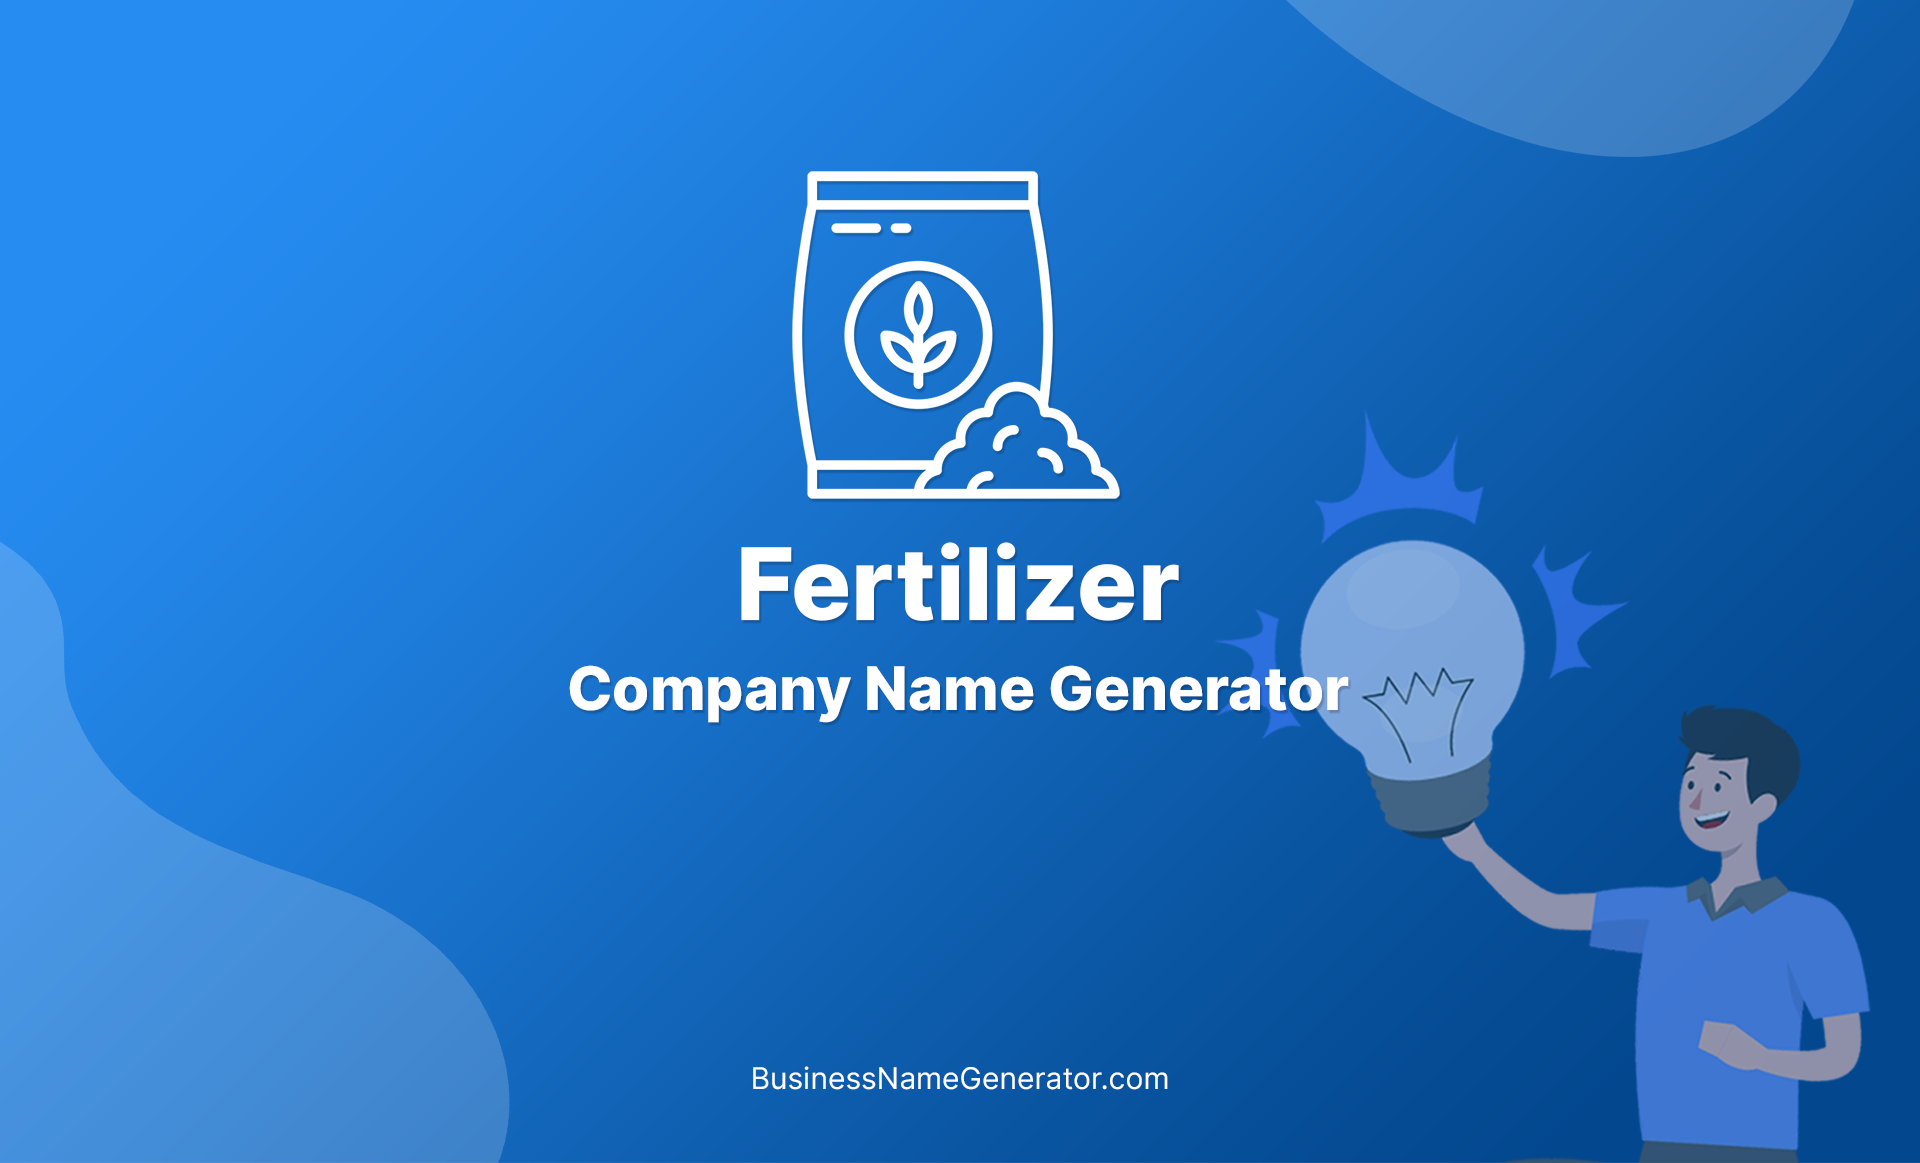 Fertilizer Company Name Generator